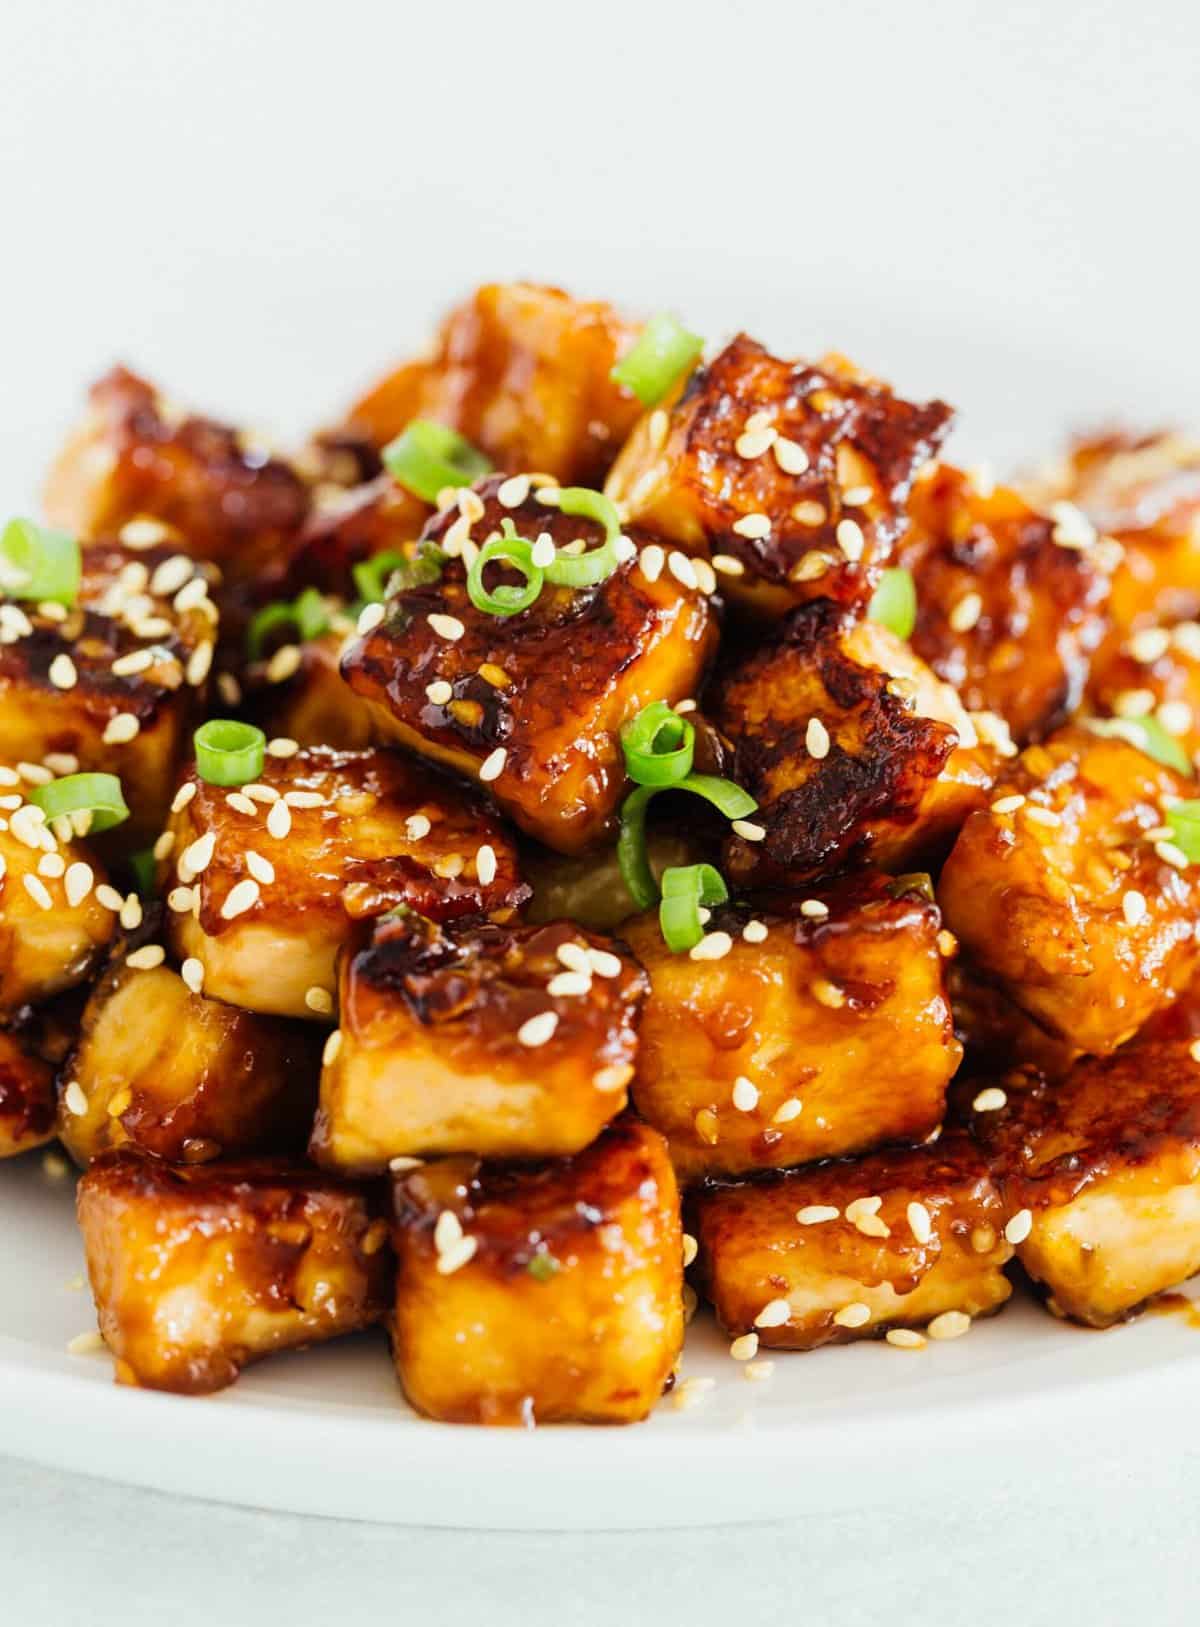 A pile of sesame garlic fried tofu on a plate garnished with sesame seeds.